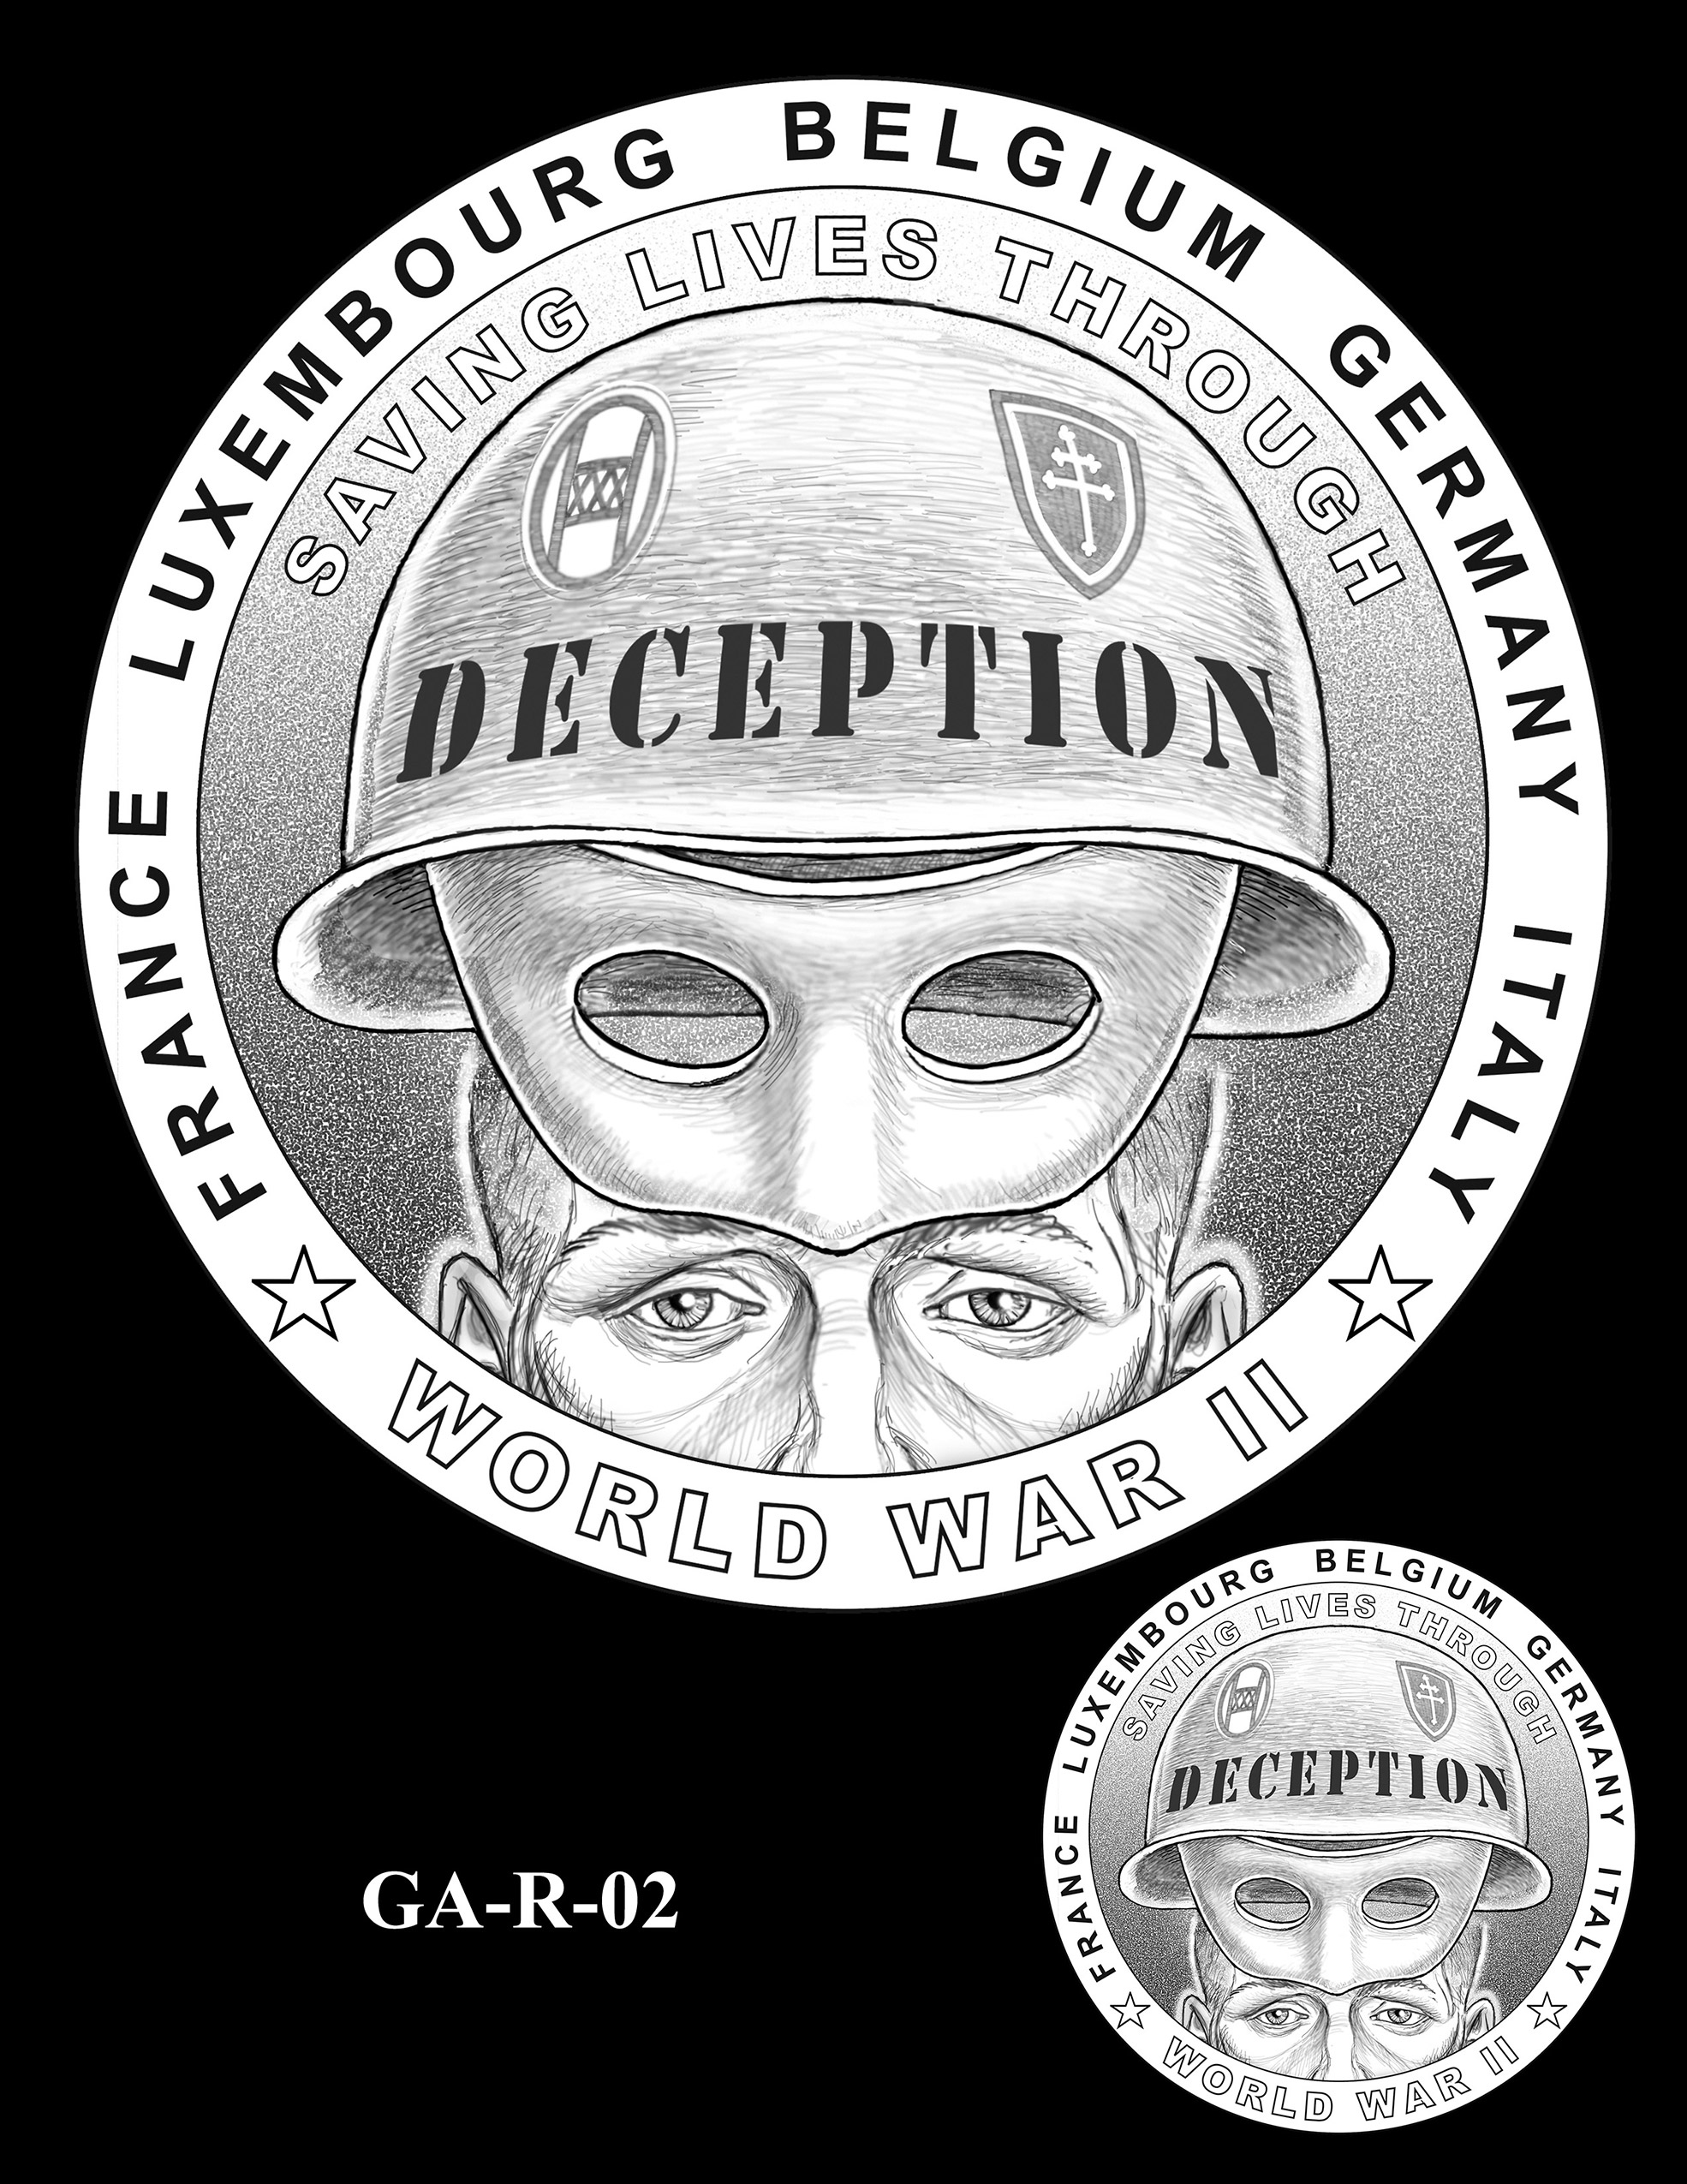 GA-R-02 -- Ghost Army Congressional Gold Medal